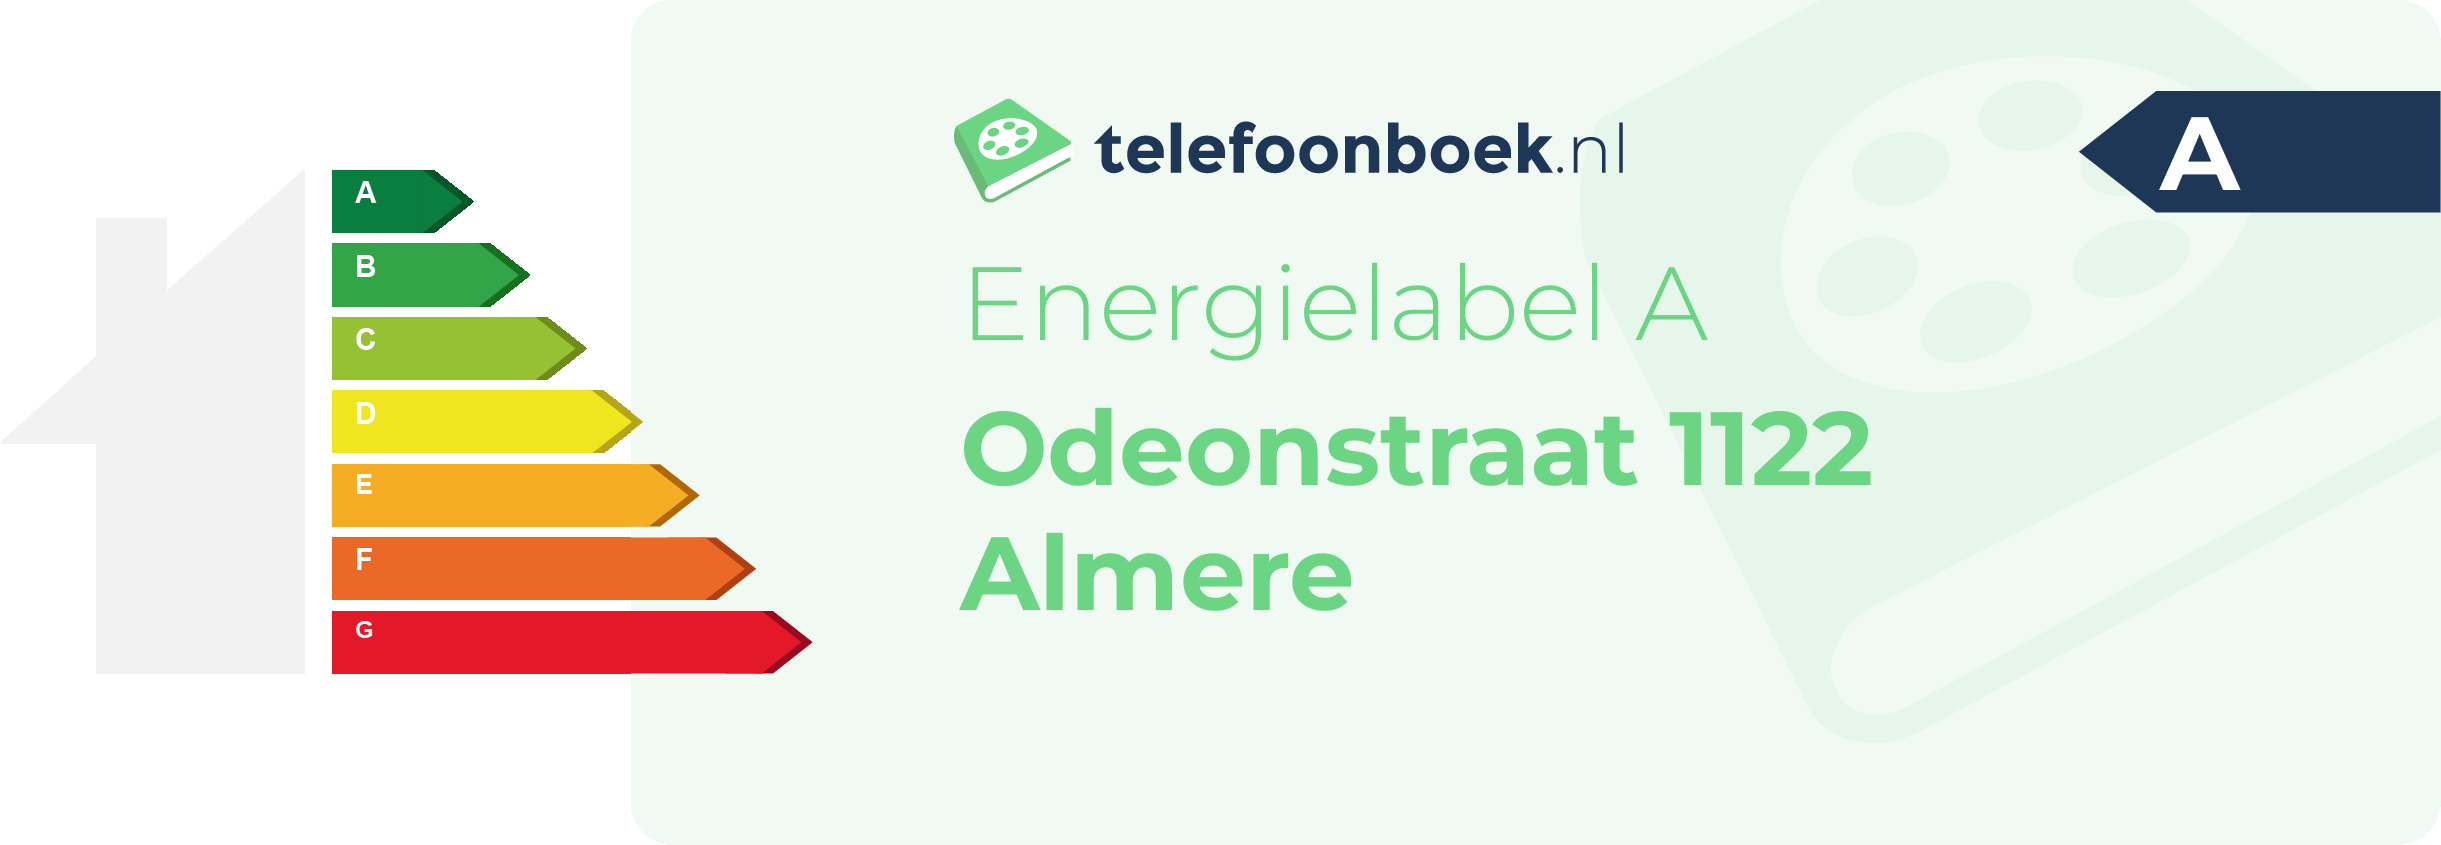 Energielabel Odeonstraat 1122 Almere